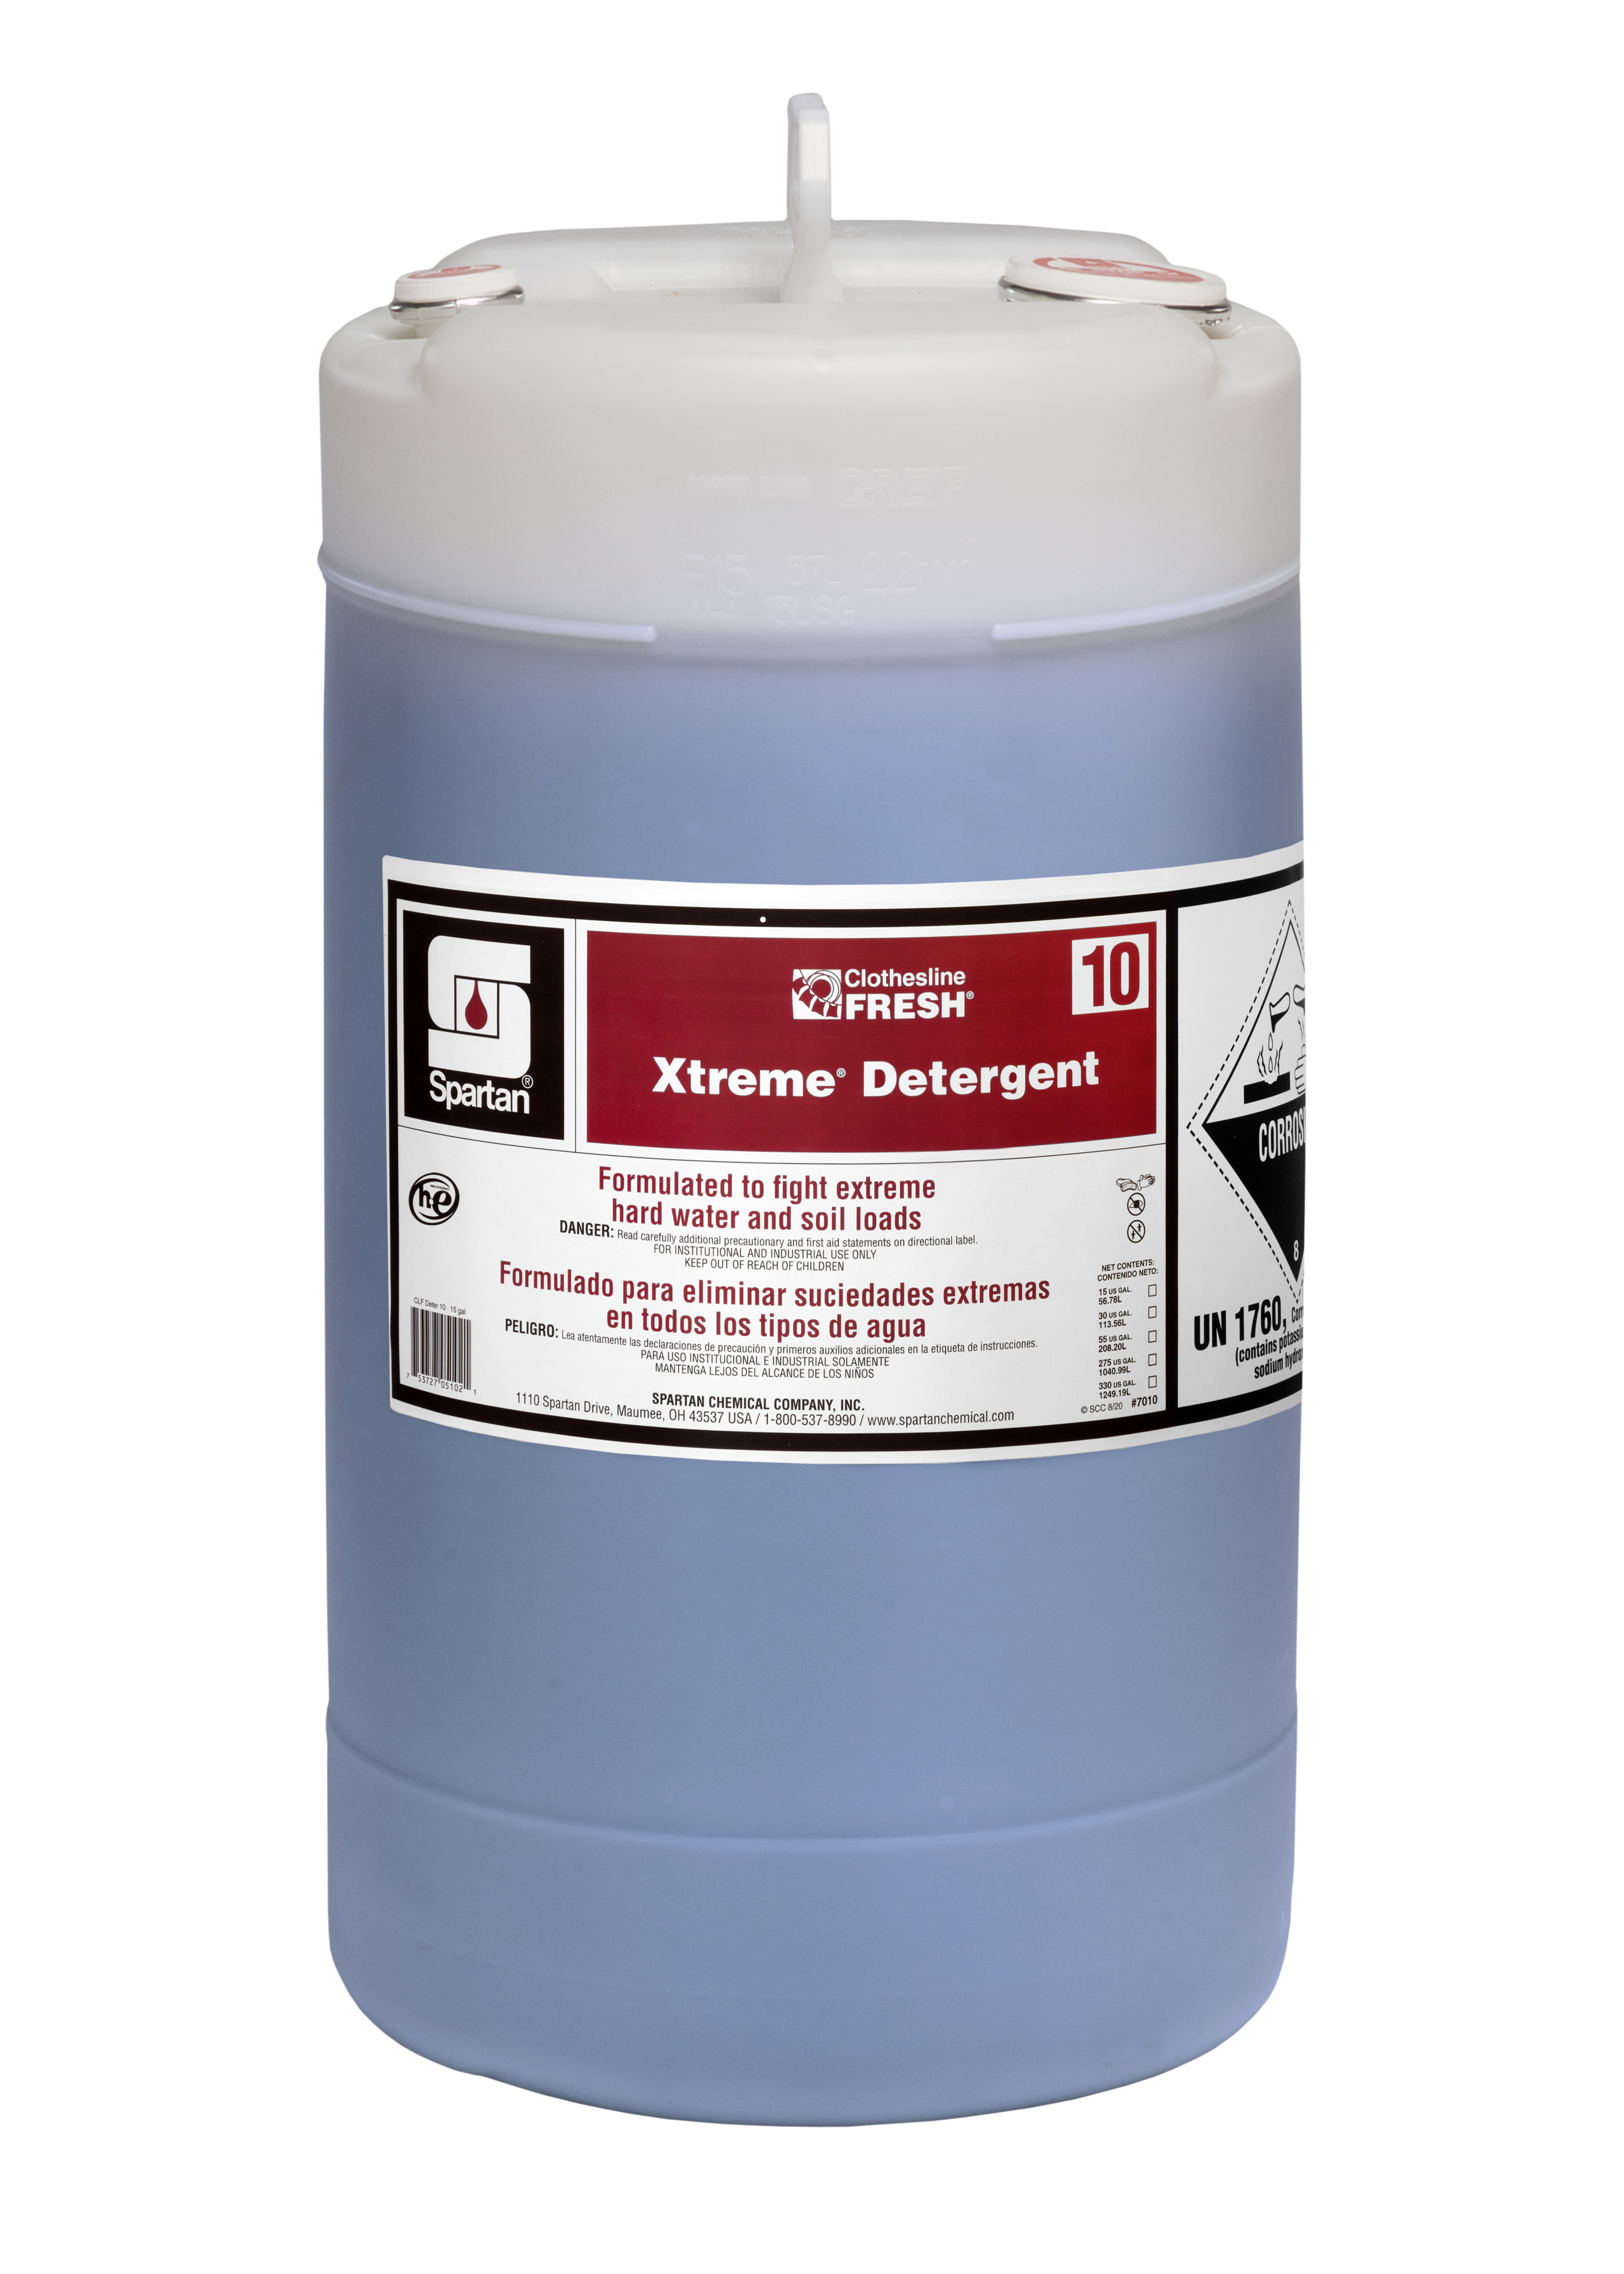 Spartan Chemical Company Clothesline Fresh Xtreme Detergent 10, 15 GAL DRUM